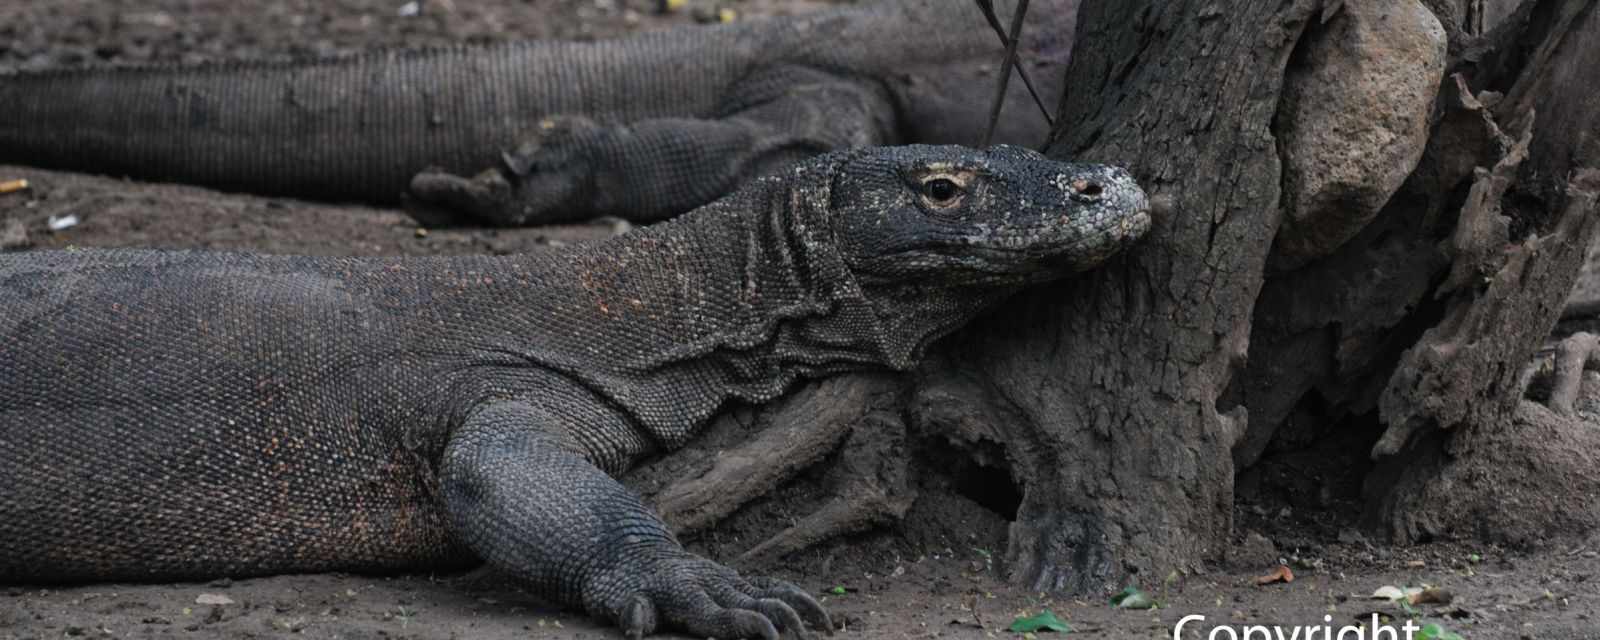 Dragons on Komodo Island